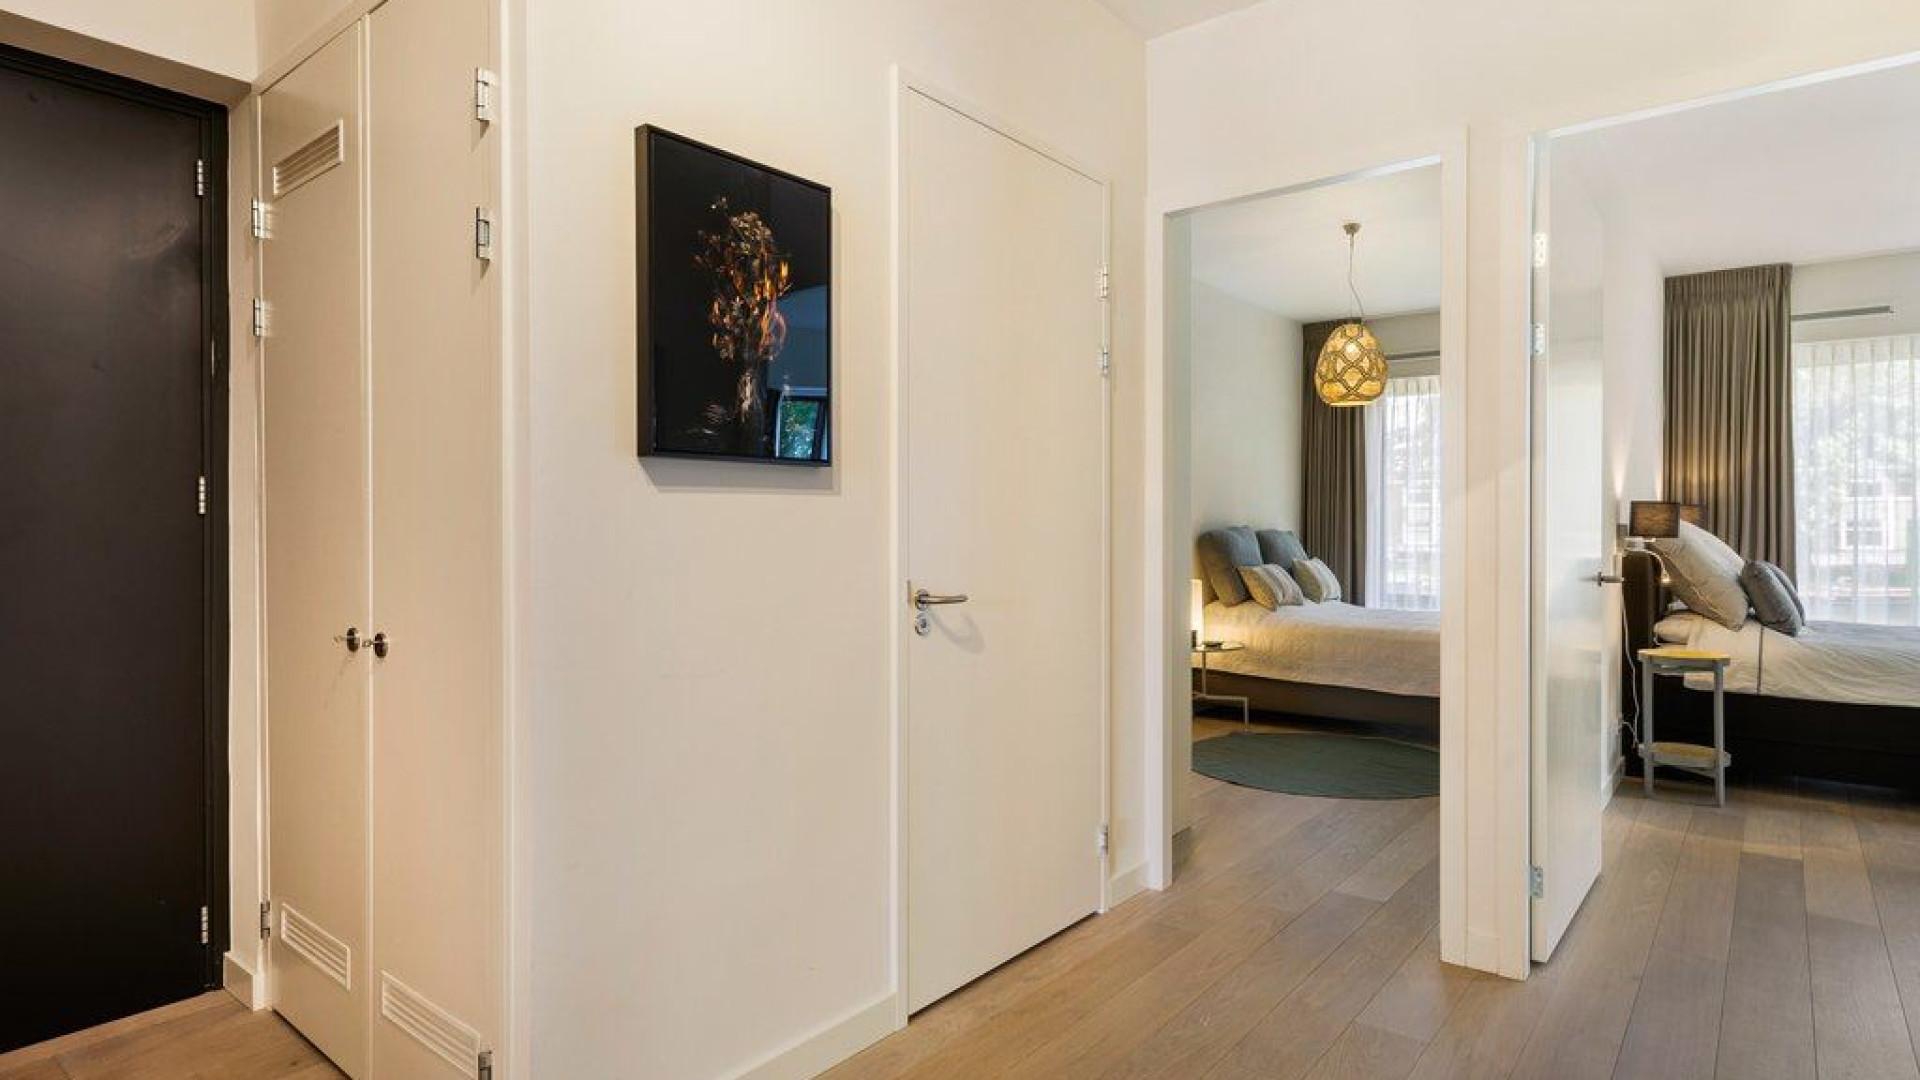 Touriya Haoud verhuist naar dit luxe en dure Amsterdamse appartement. Zie foto's